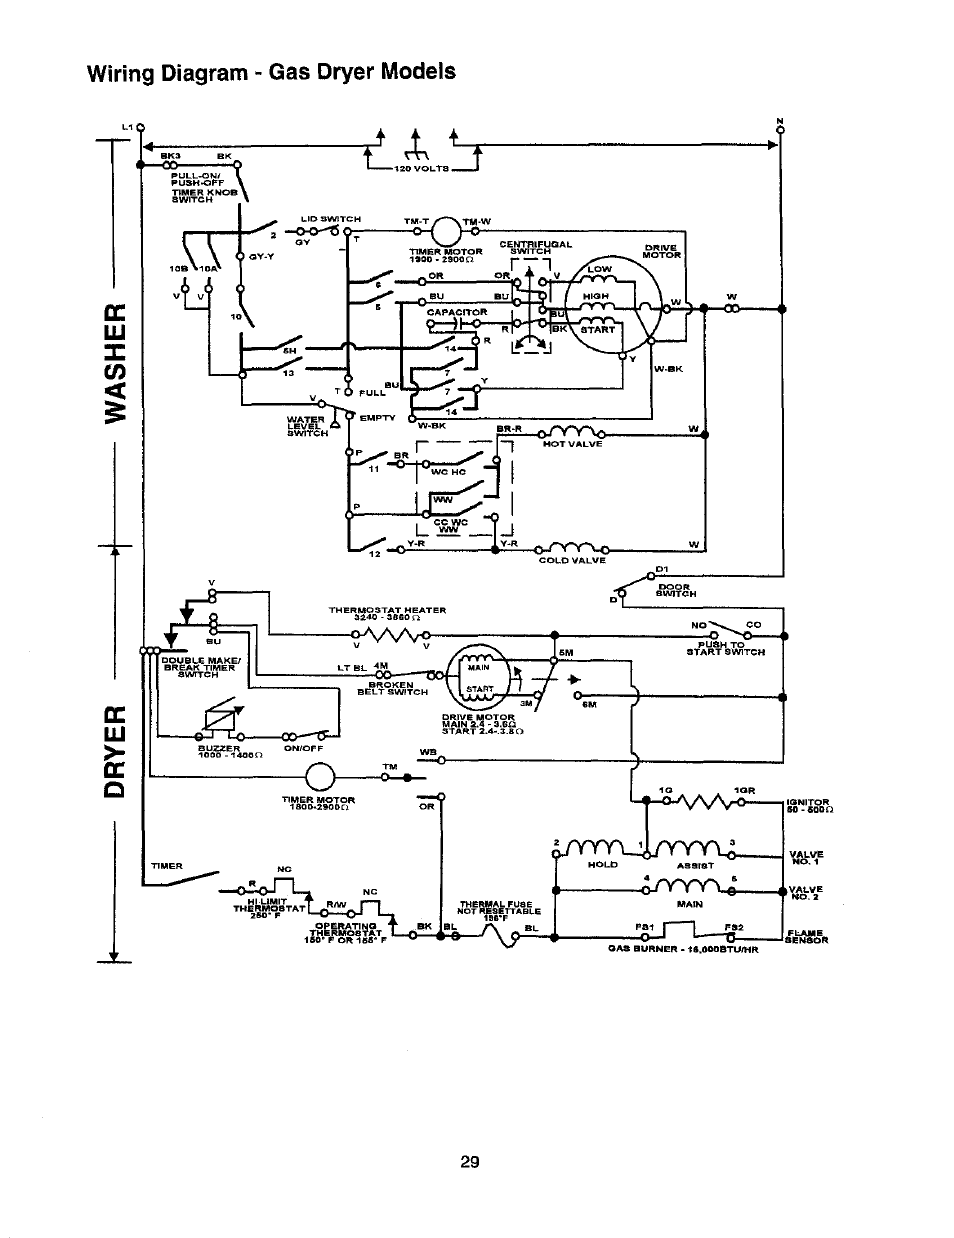 Wiring diagram - gas dryer models | Whirlpool Thin Twin User Manual